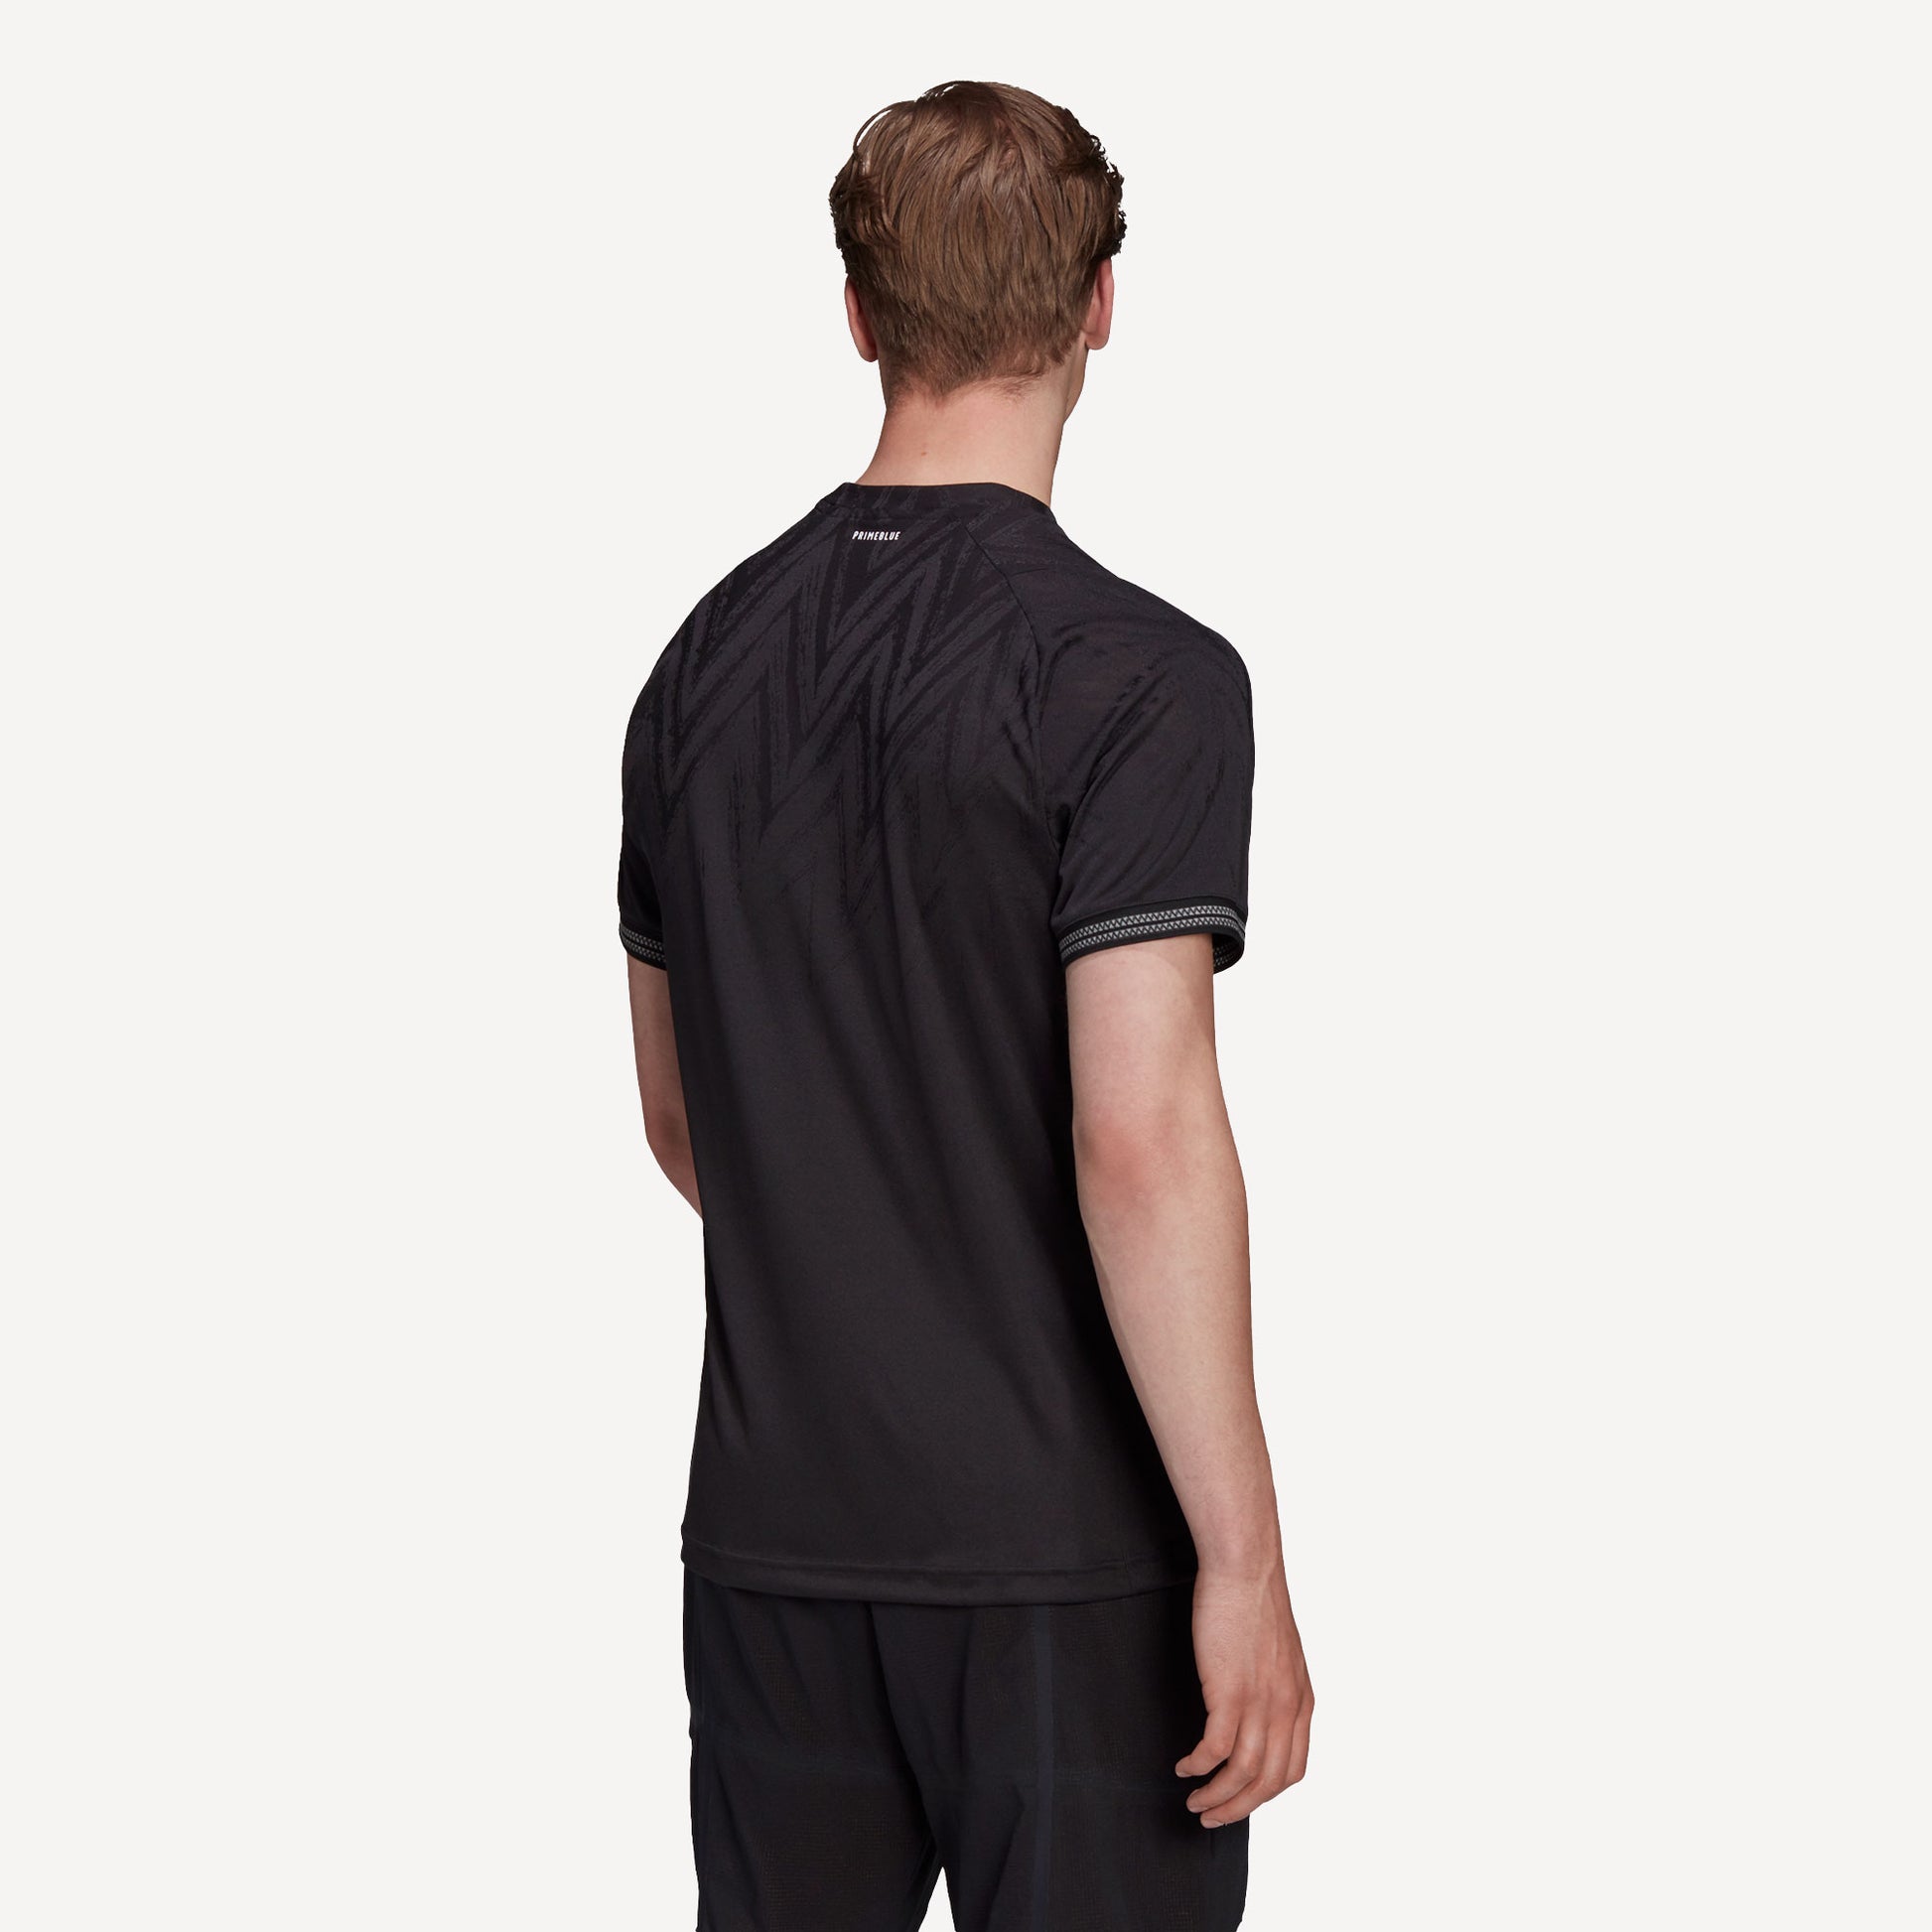 adidas Freelift Primeblue Men's Tennis Shirt Black (2)